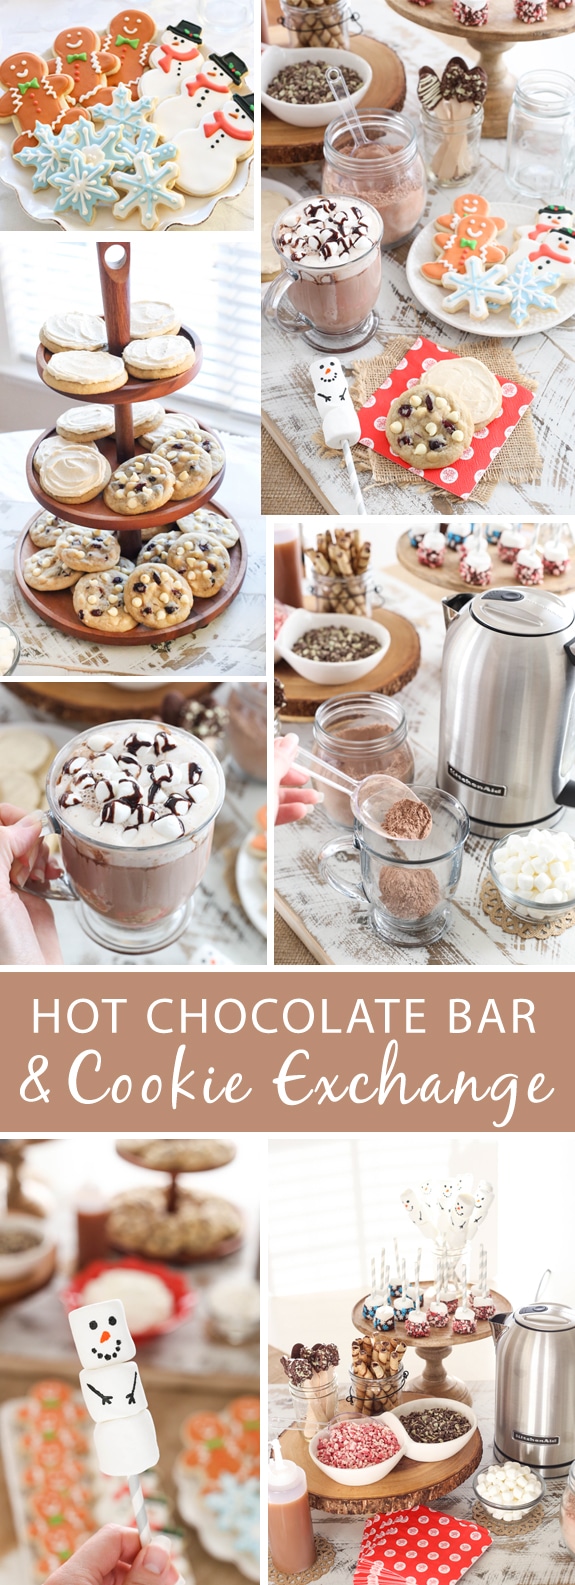 https://www.lifeloveandsugar.com/wp-content/uploads/2015/12/Hot-Chocolate-Bar-Cookie-Exchange-Party-Collage.jpg